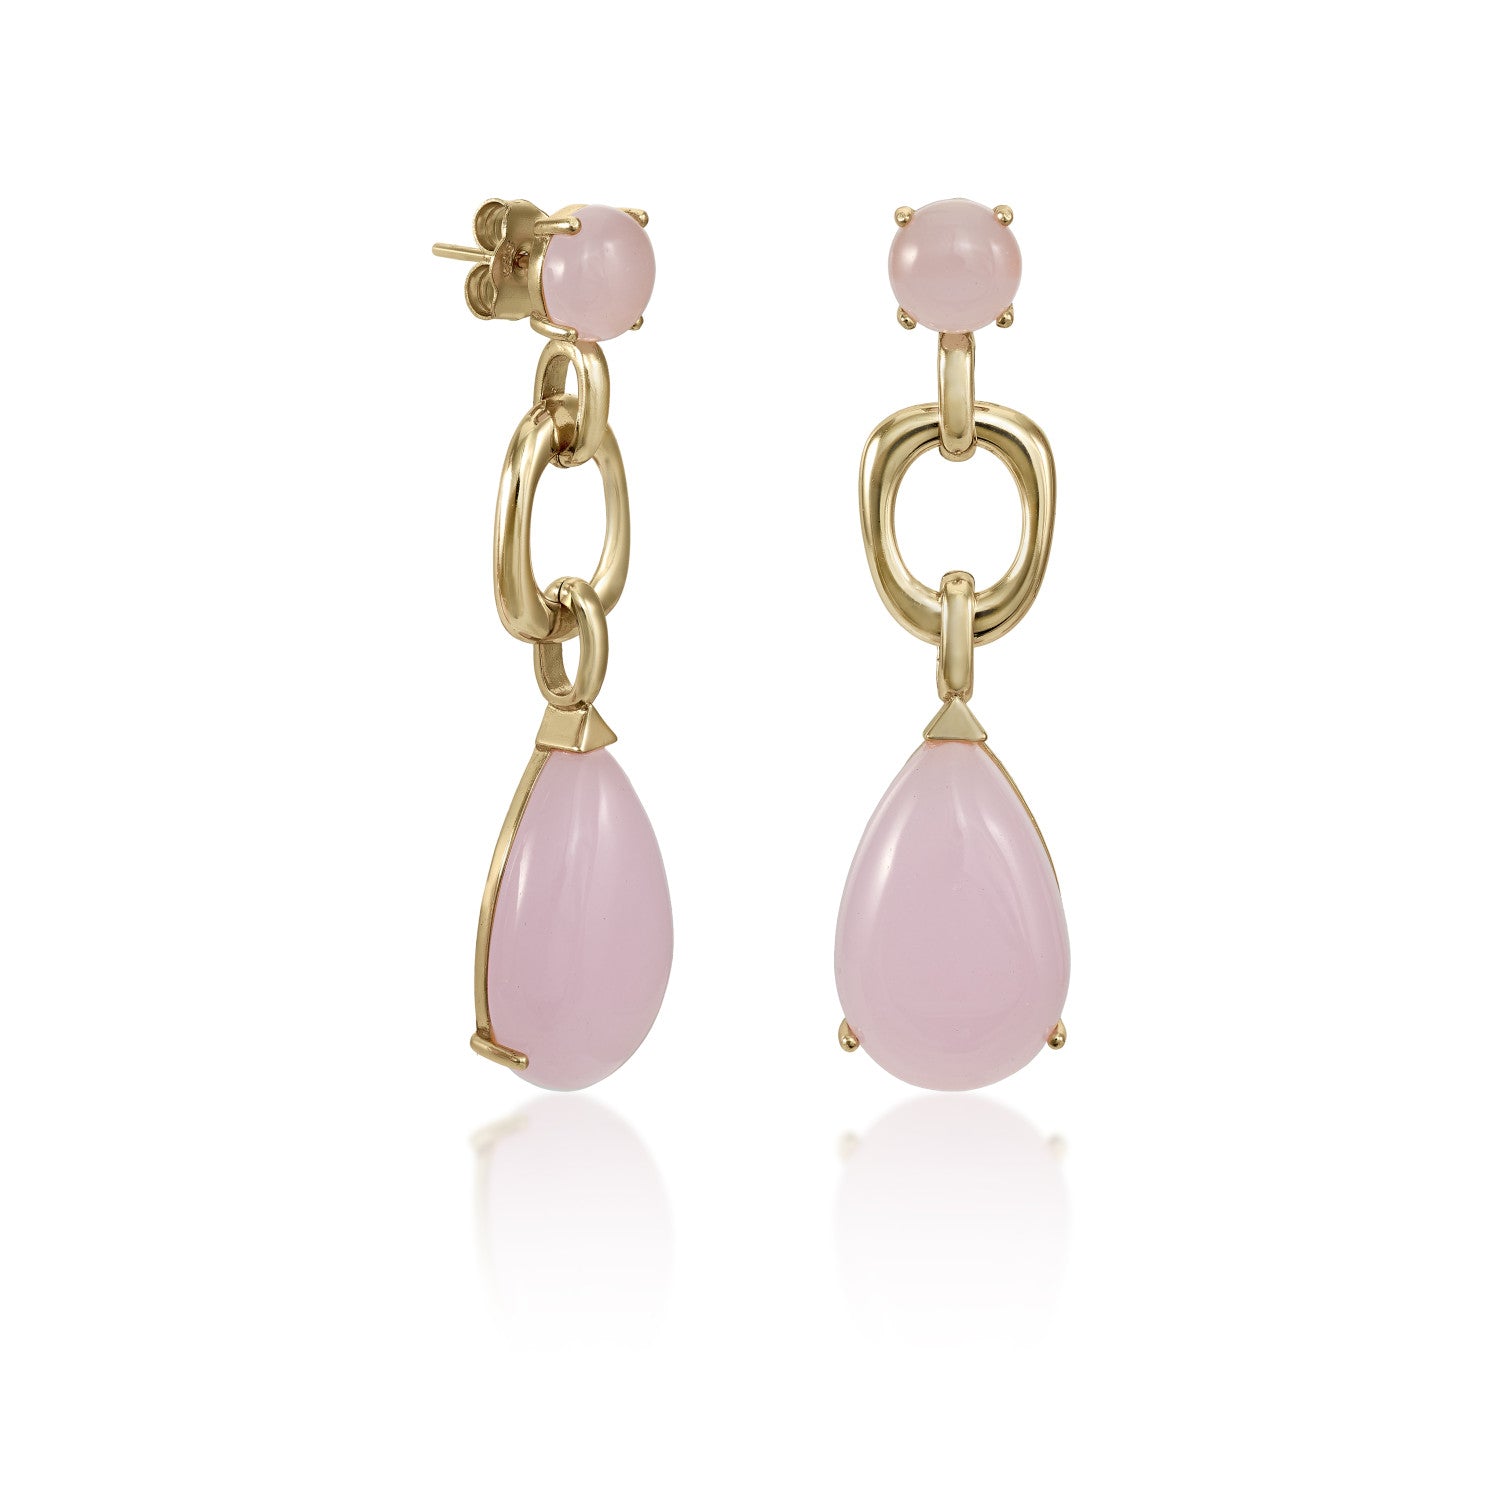 Natural stone teardrop earrings rose quartz tone